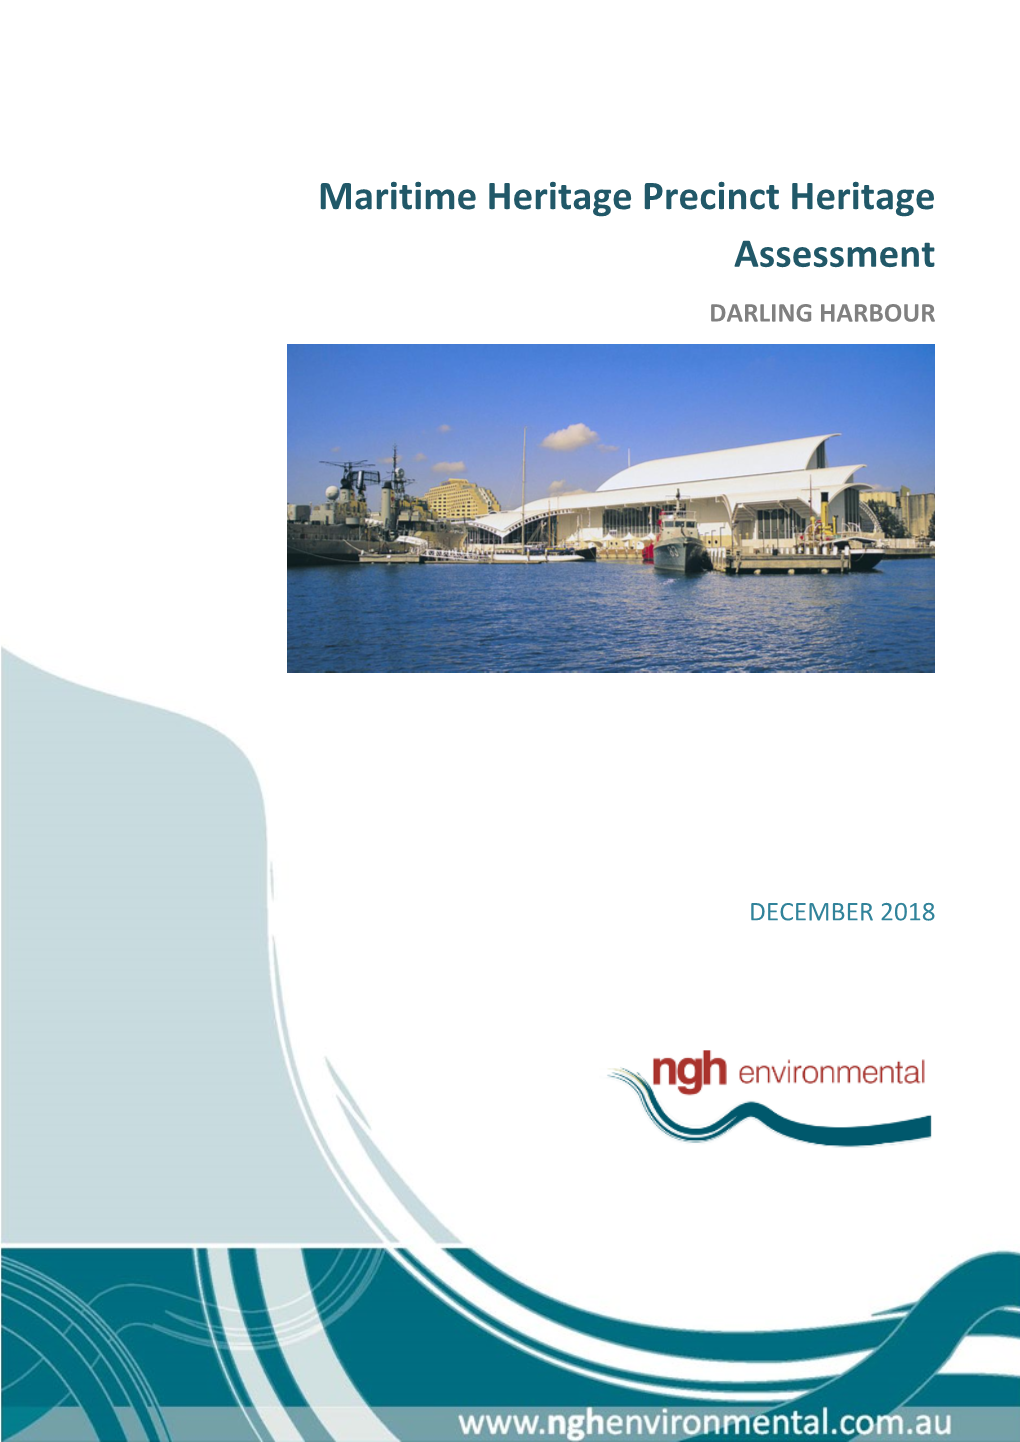 Maritime Heritage Precinct Heritage Assessment DARLING HARBOUR